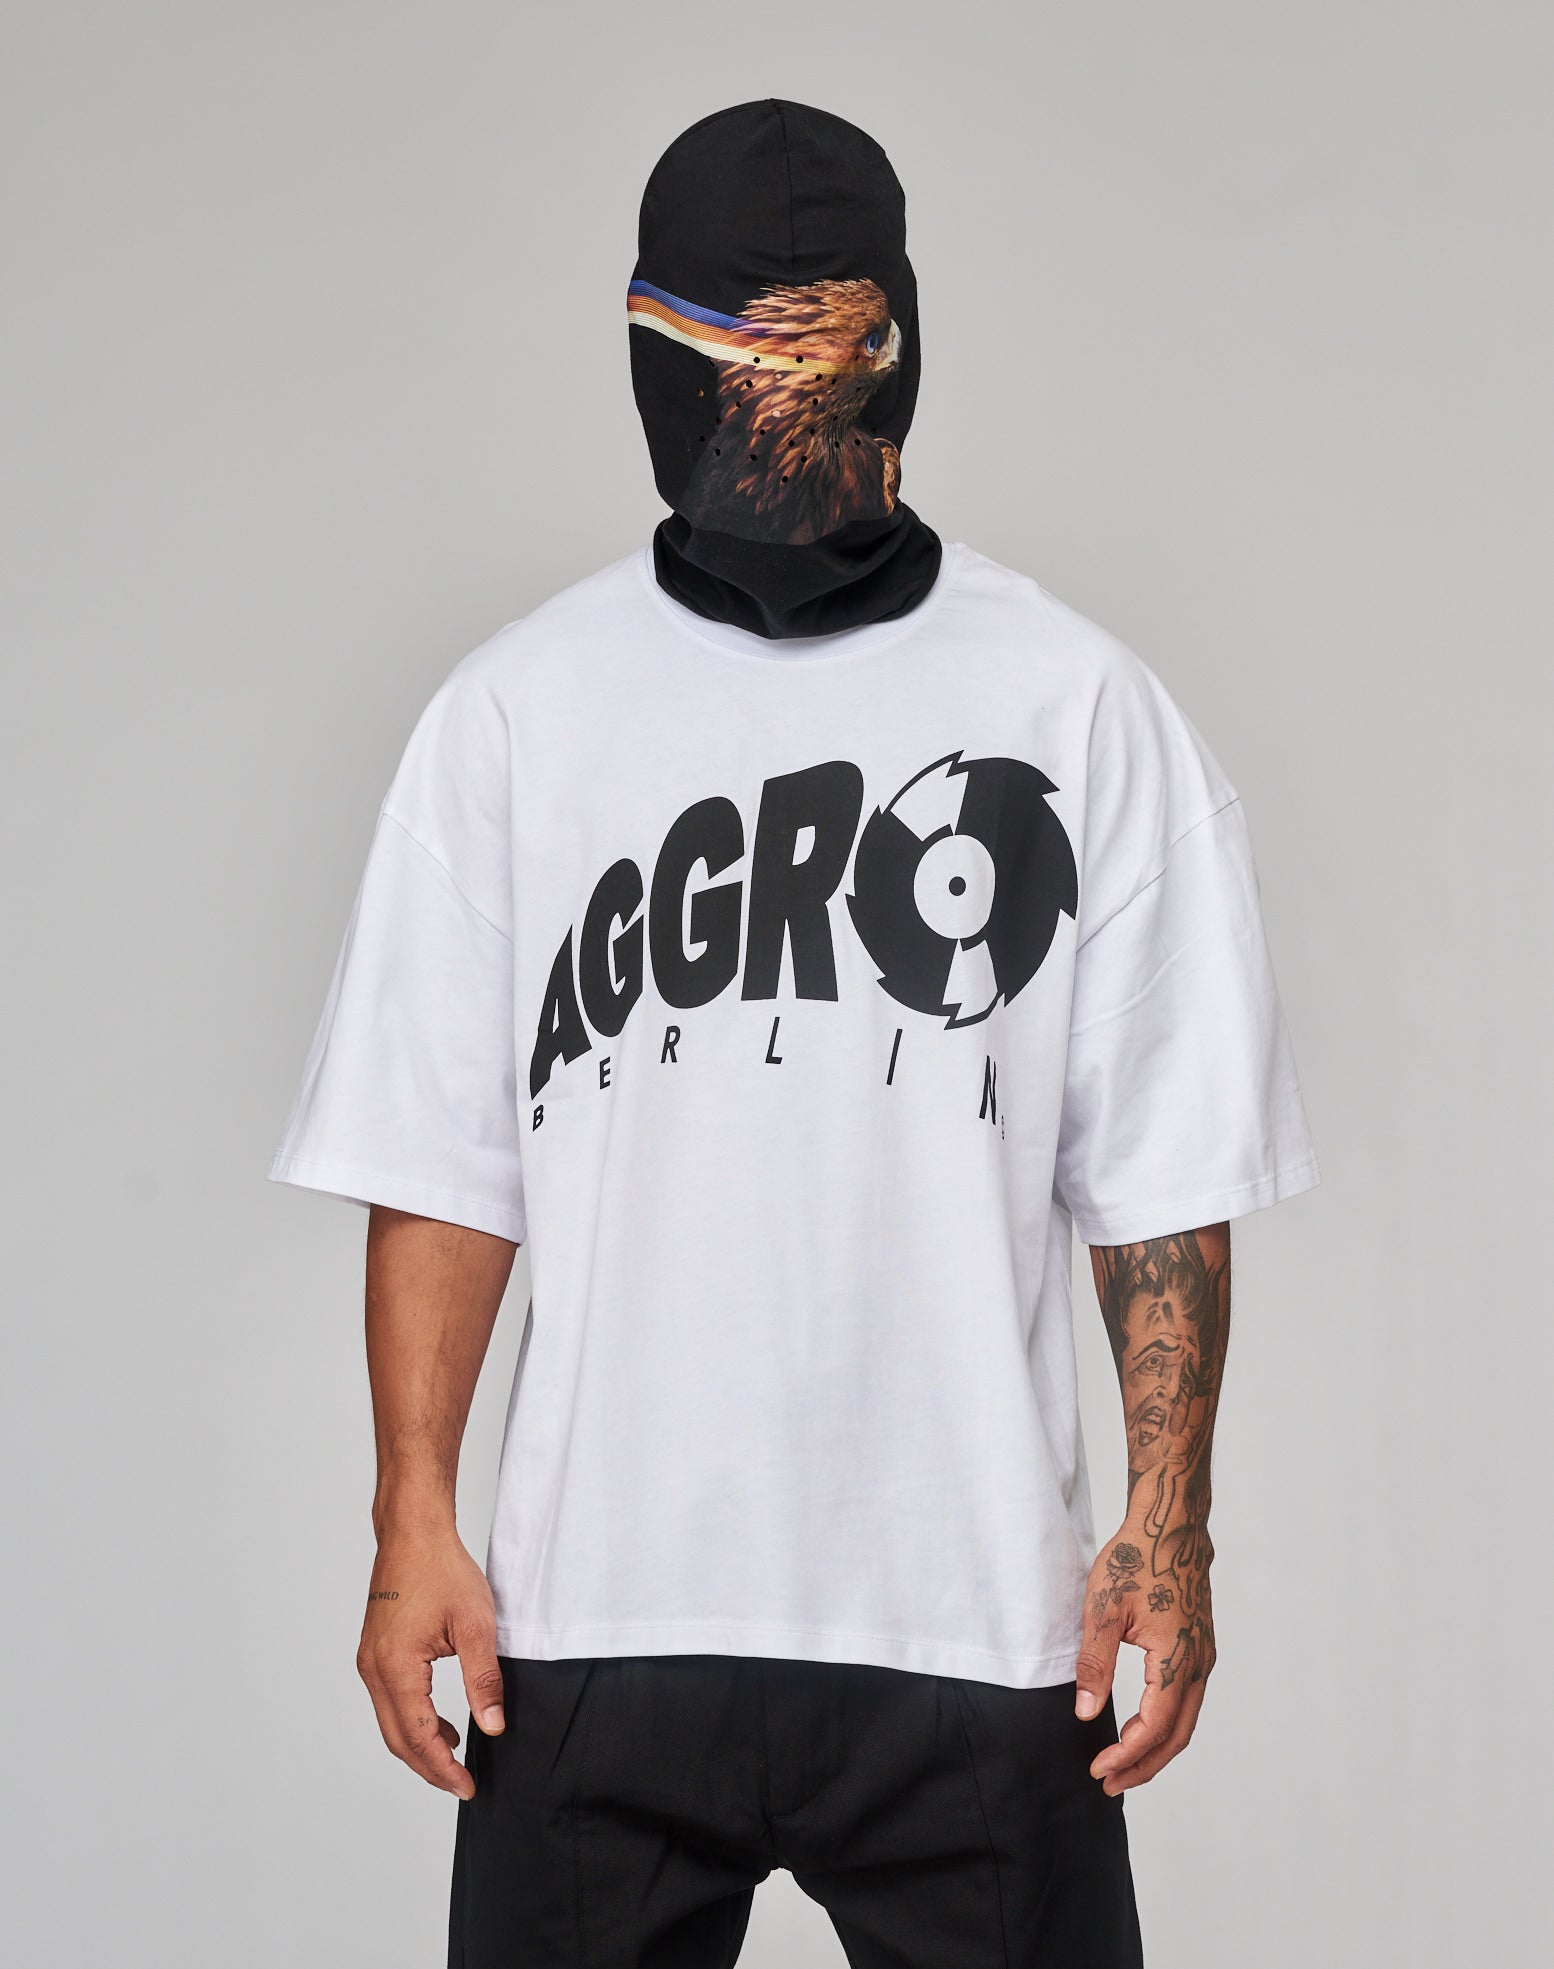 AGGRO Berlin T-Shirt Weiß-Schwarz